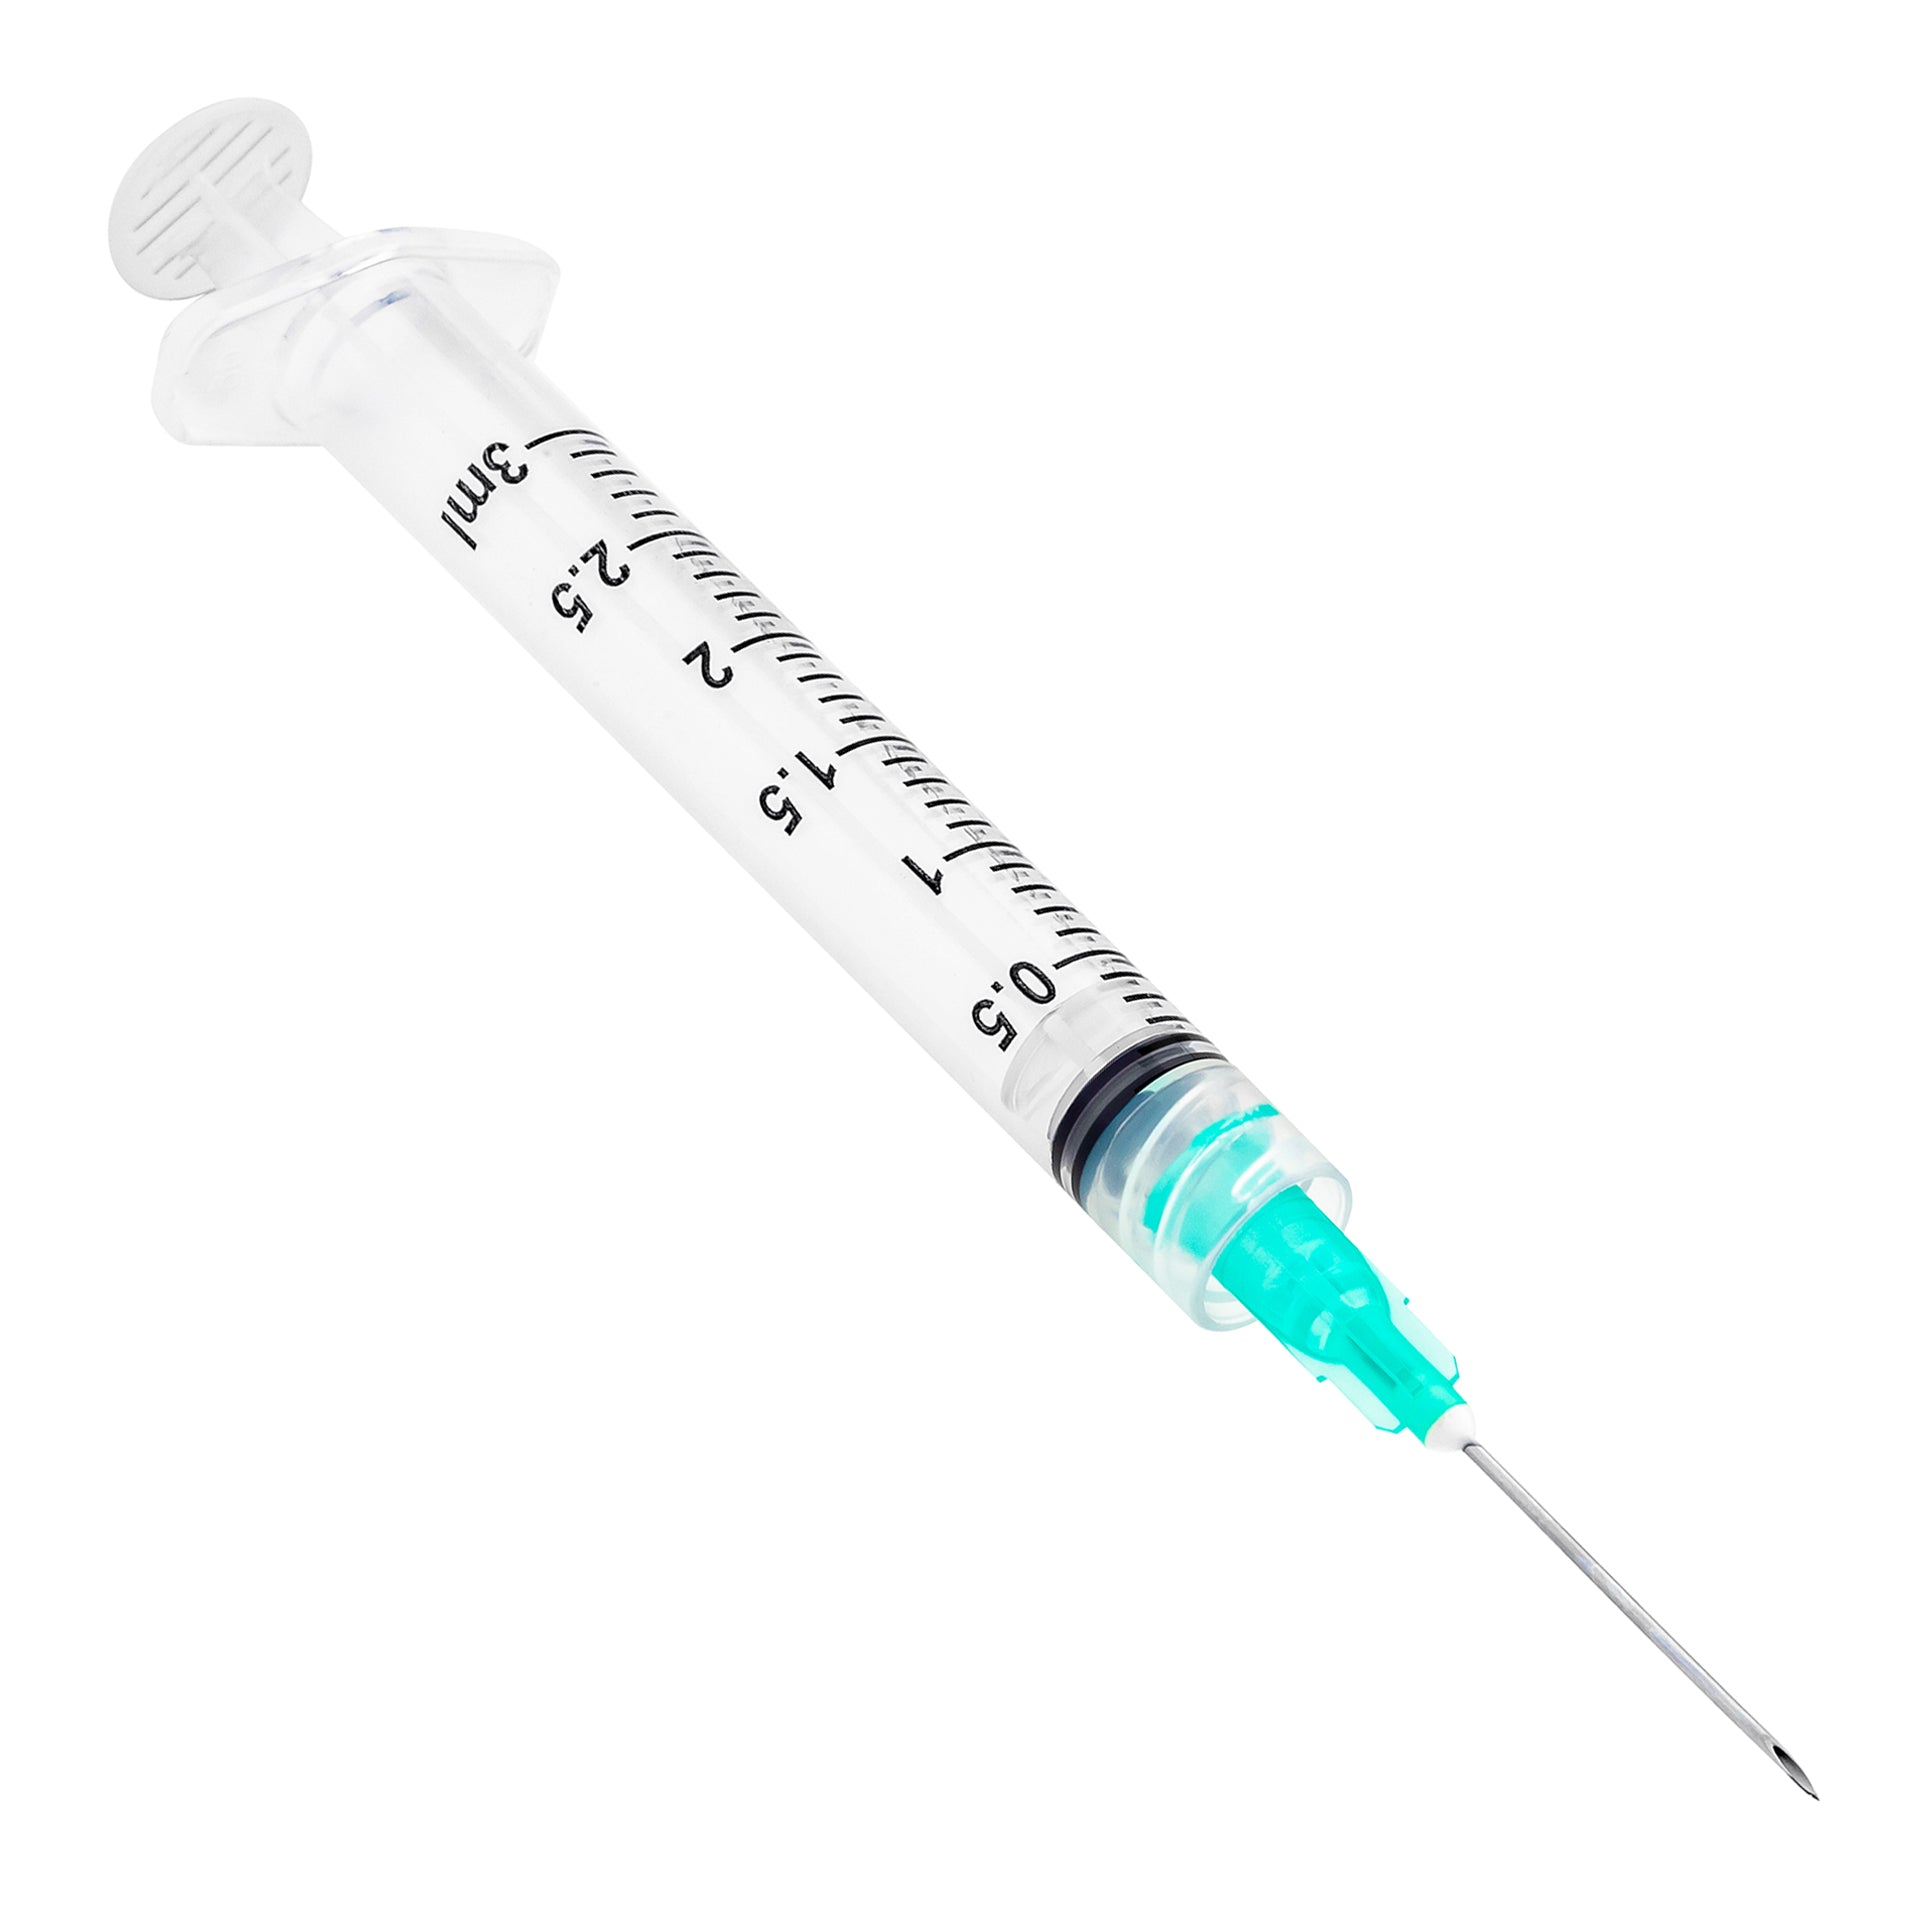 BX/10 - SOL-M 20ml Luer Lock Syringe Sterile Convenience Tray